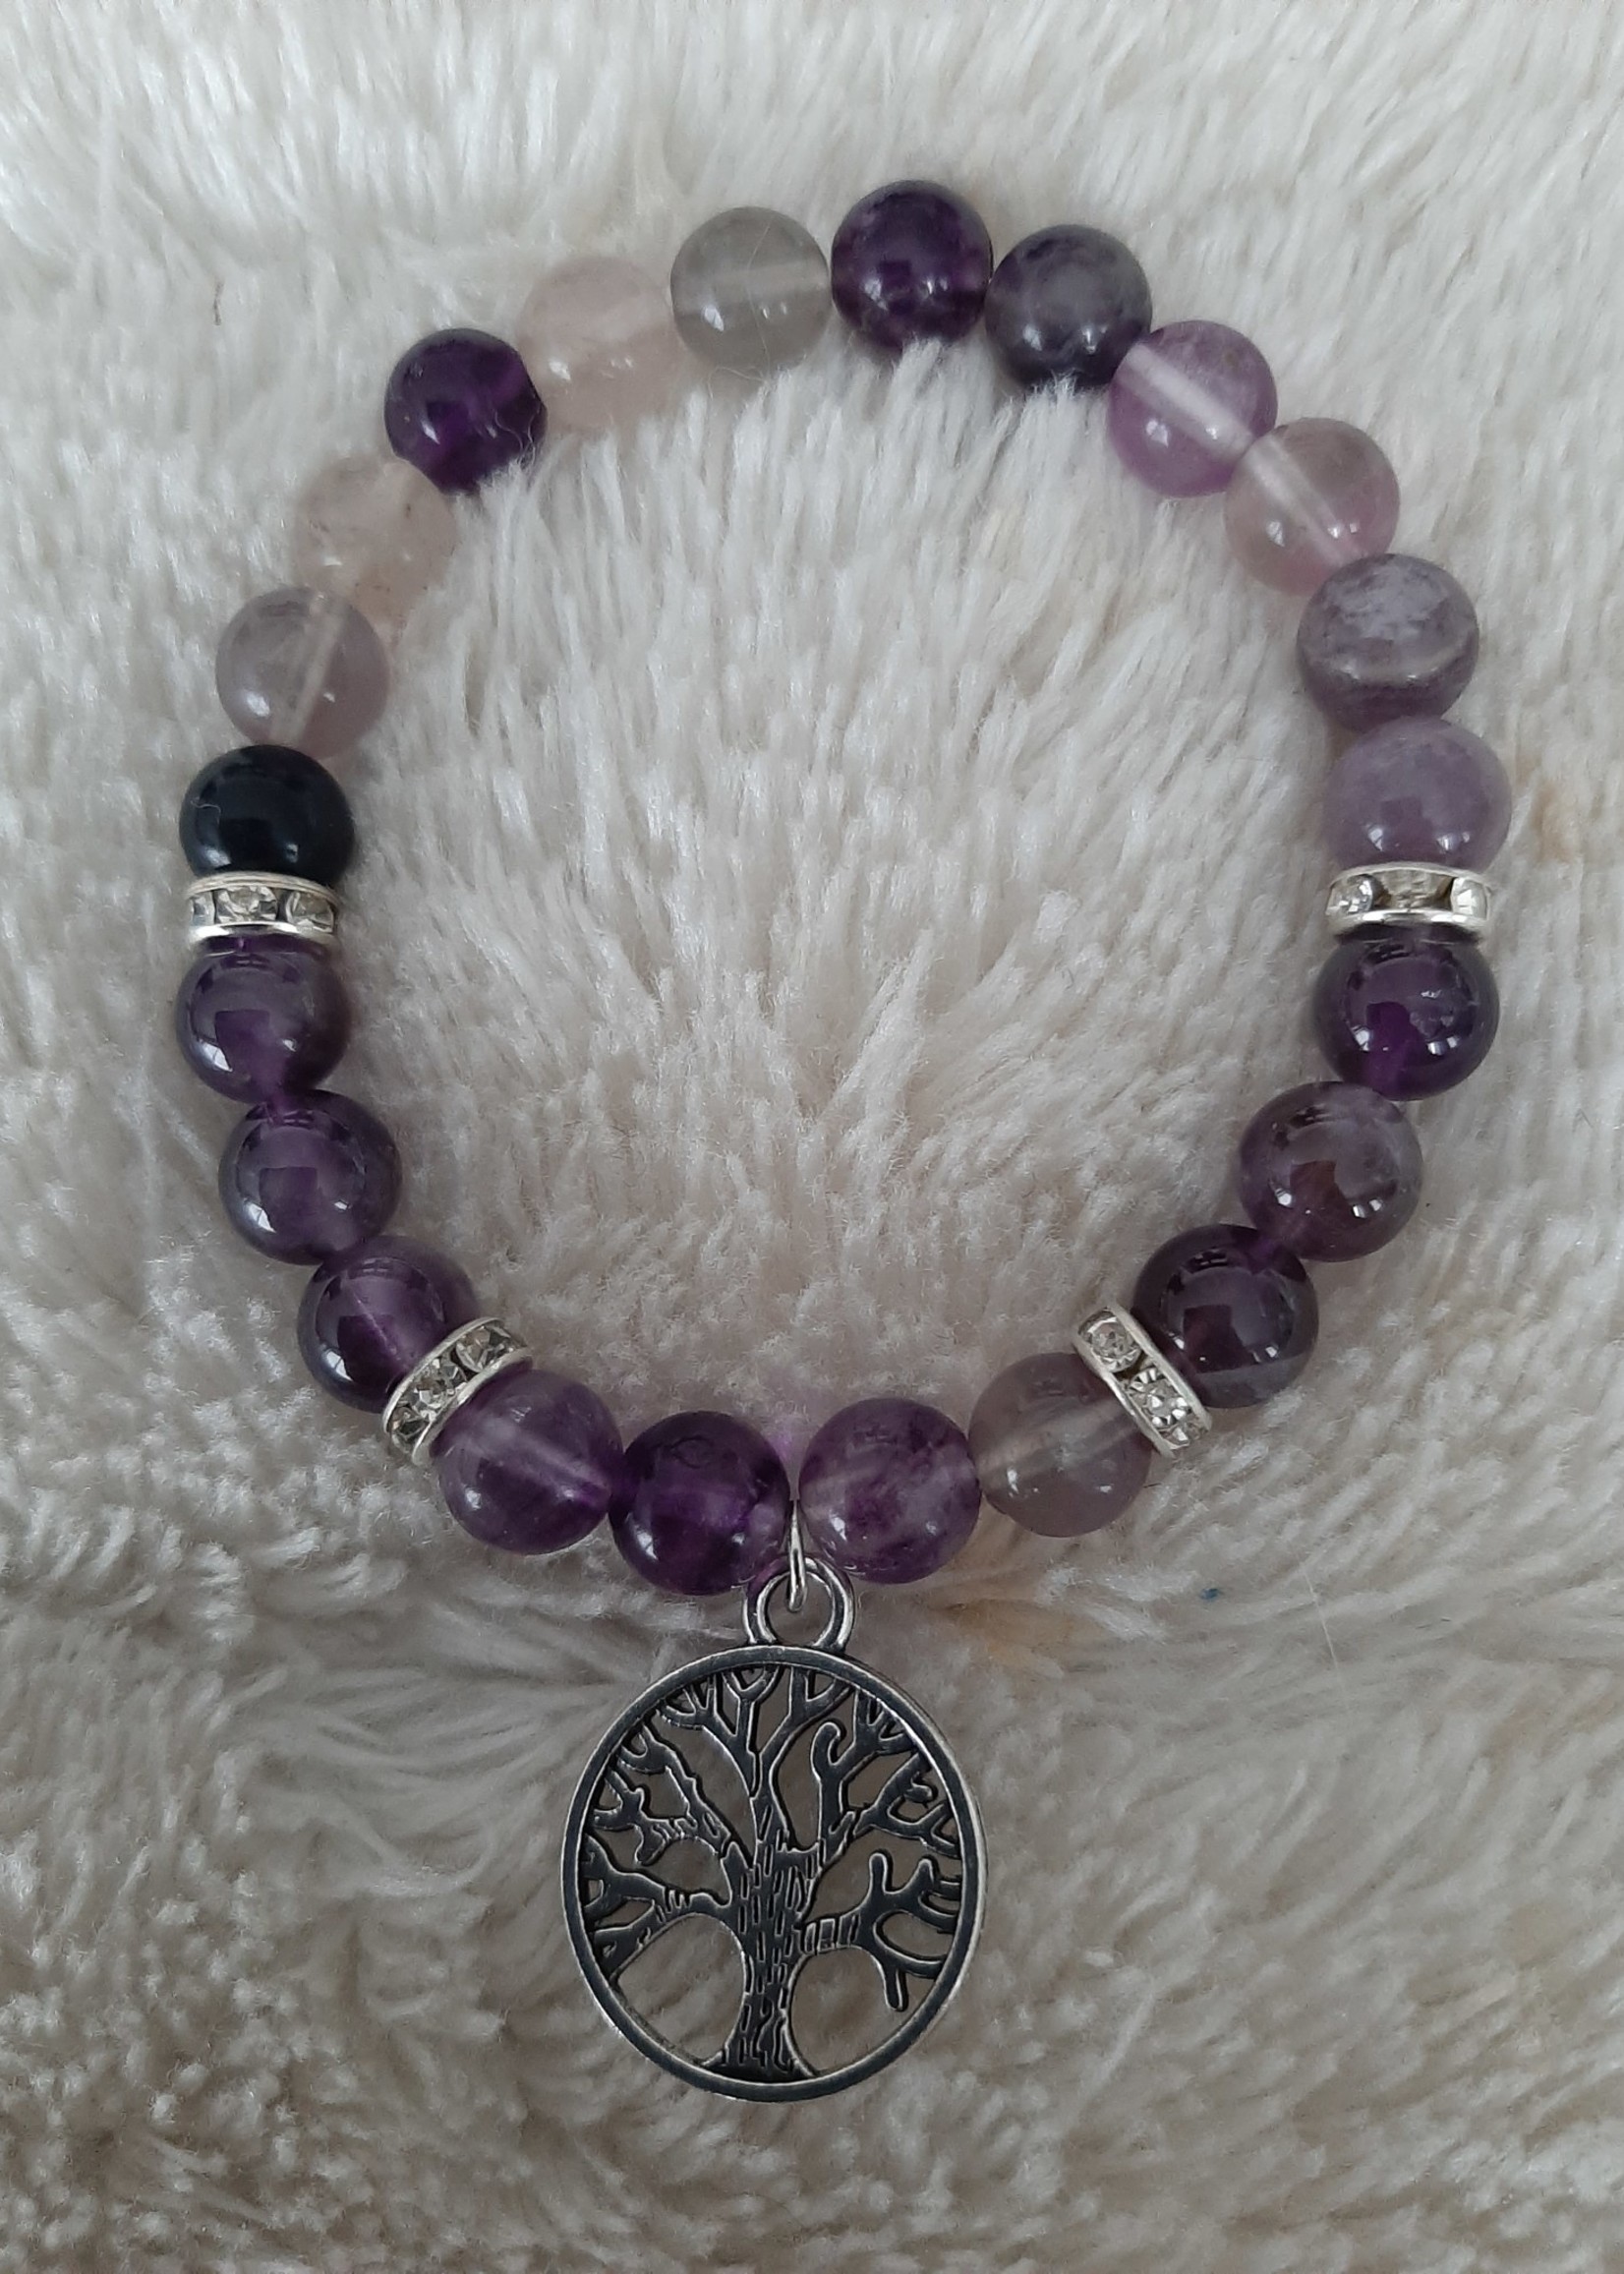 Bracelet Fluorite/Amethyst with tree of life charm